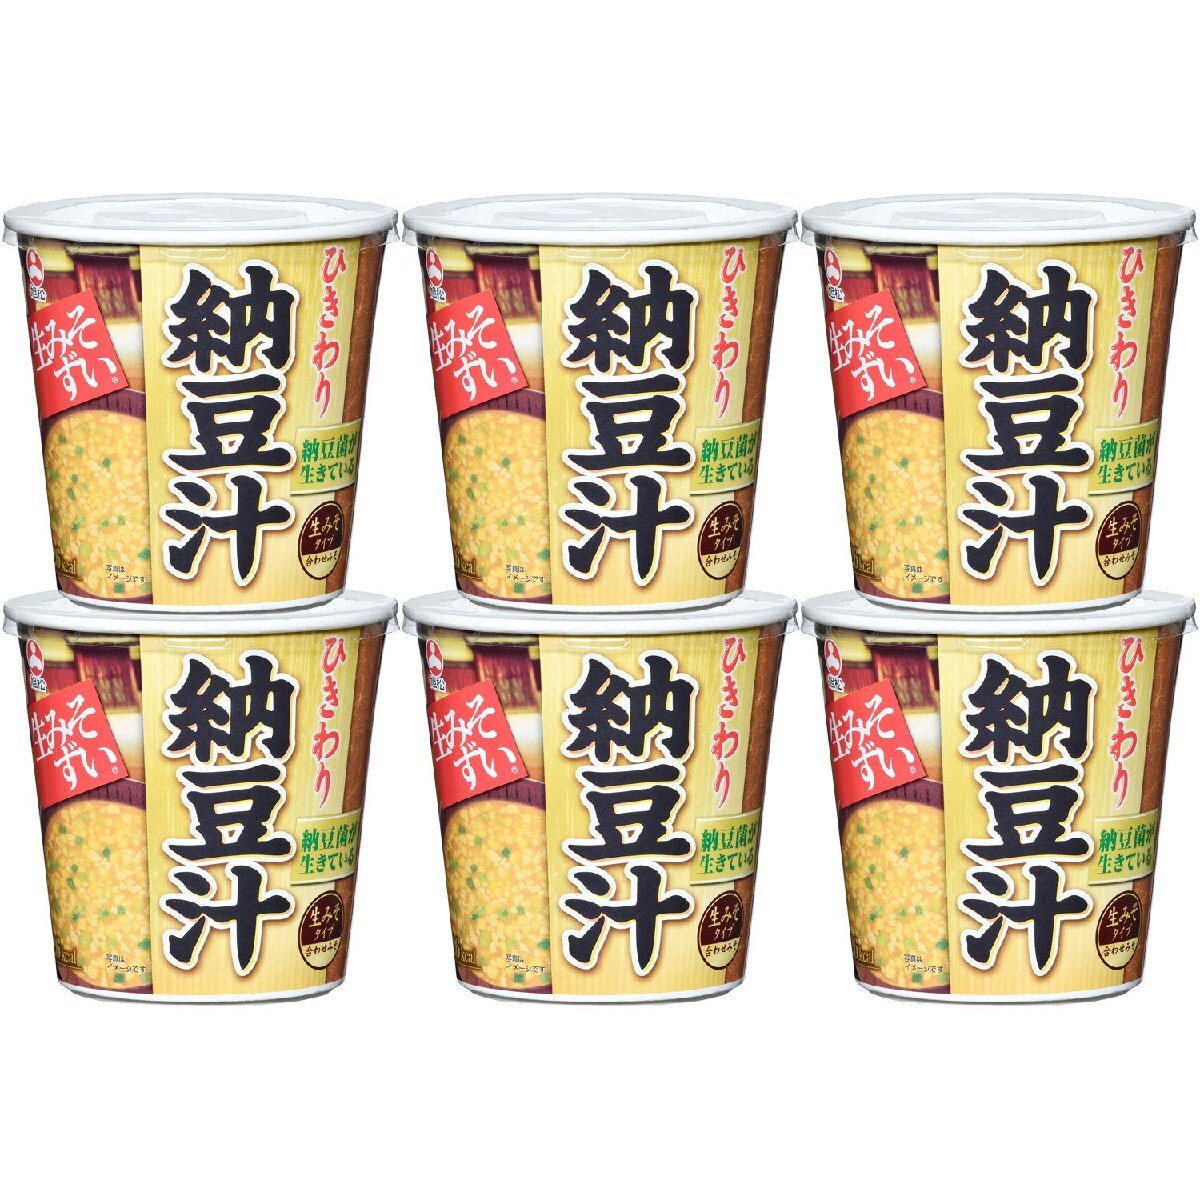  asahi pine food cup raw miso ...... natto .15.5g ×6 piece 